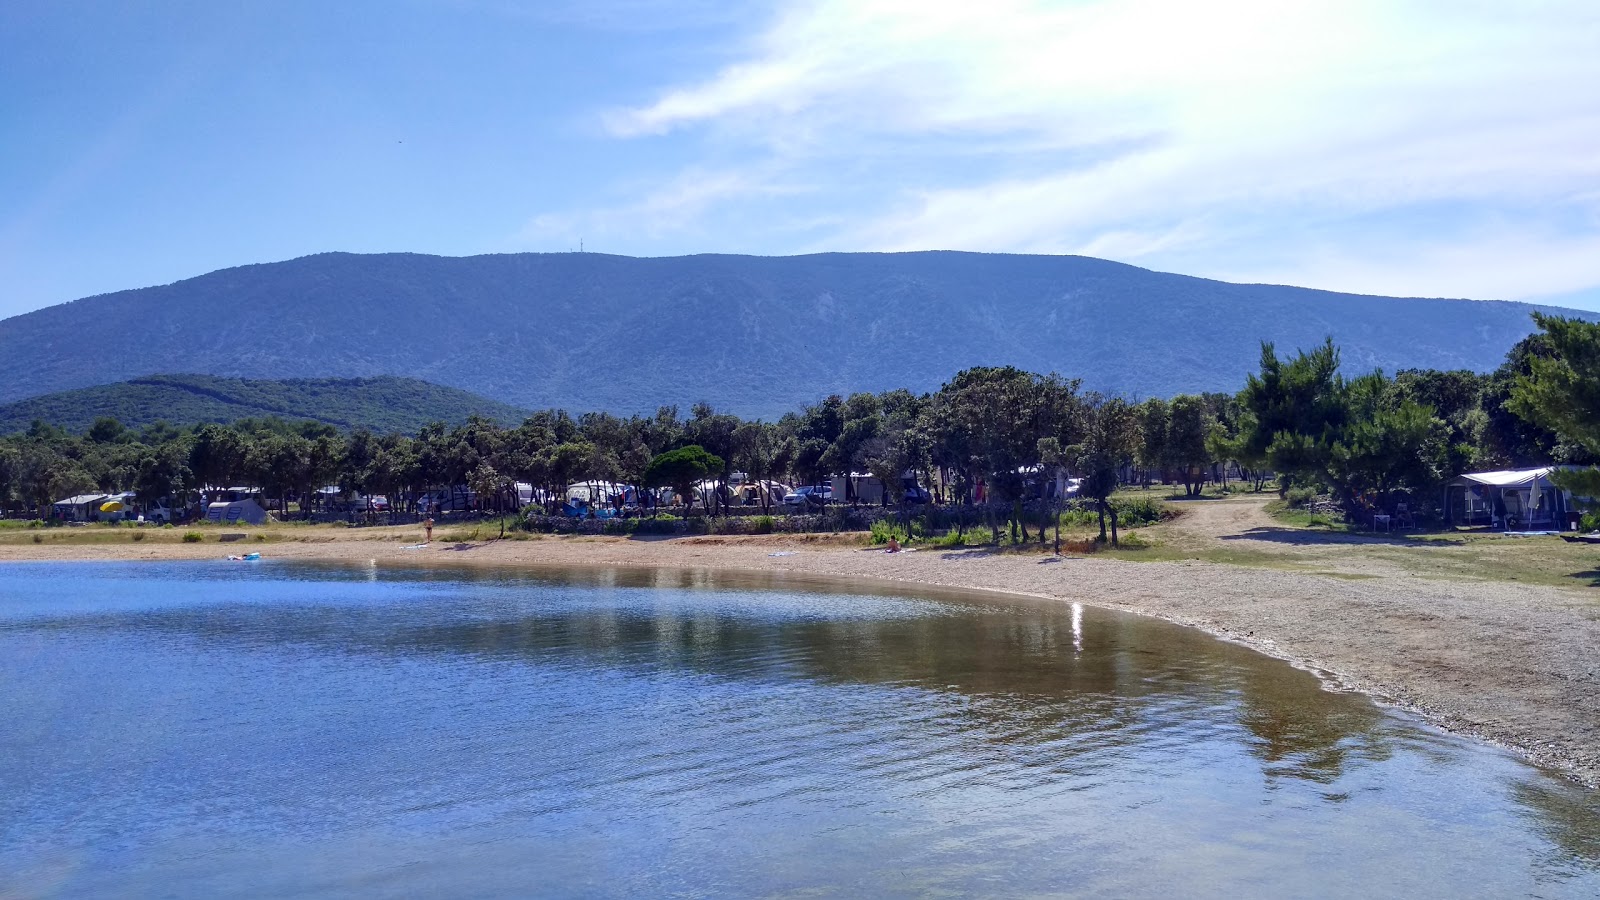 Fotografija Lopari beach z turkizna čista voda površino